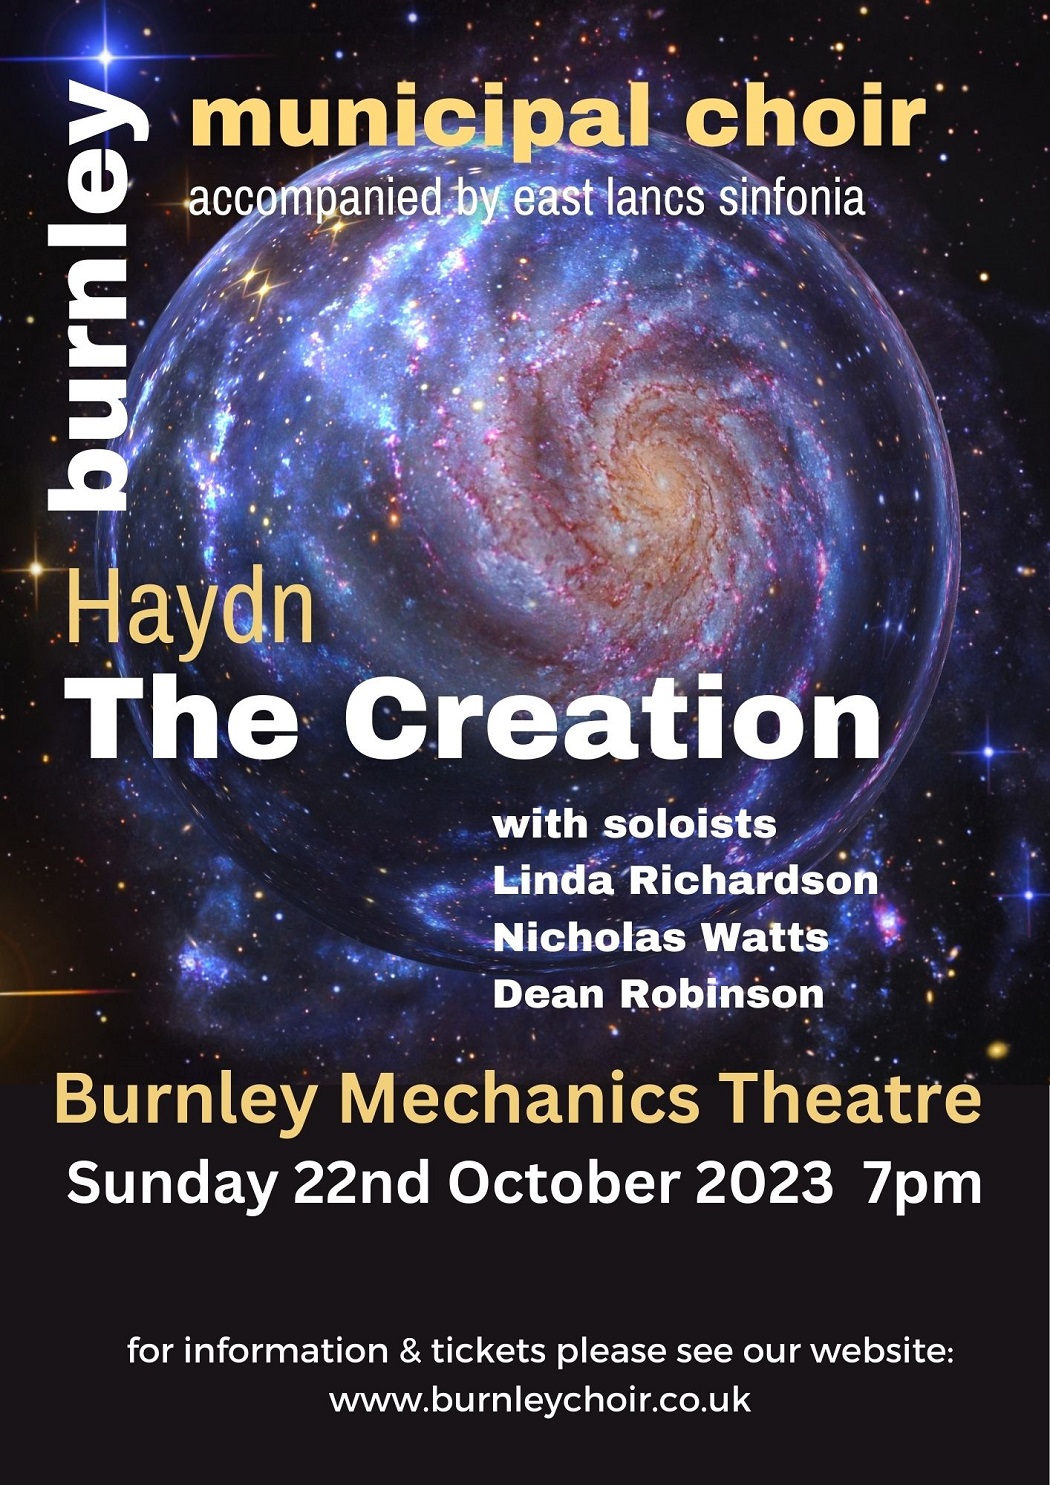 Burnley Municipal Choir present The Creation by Haydn